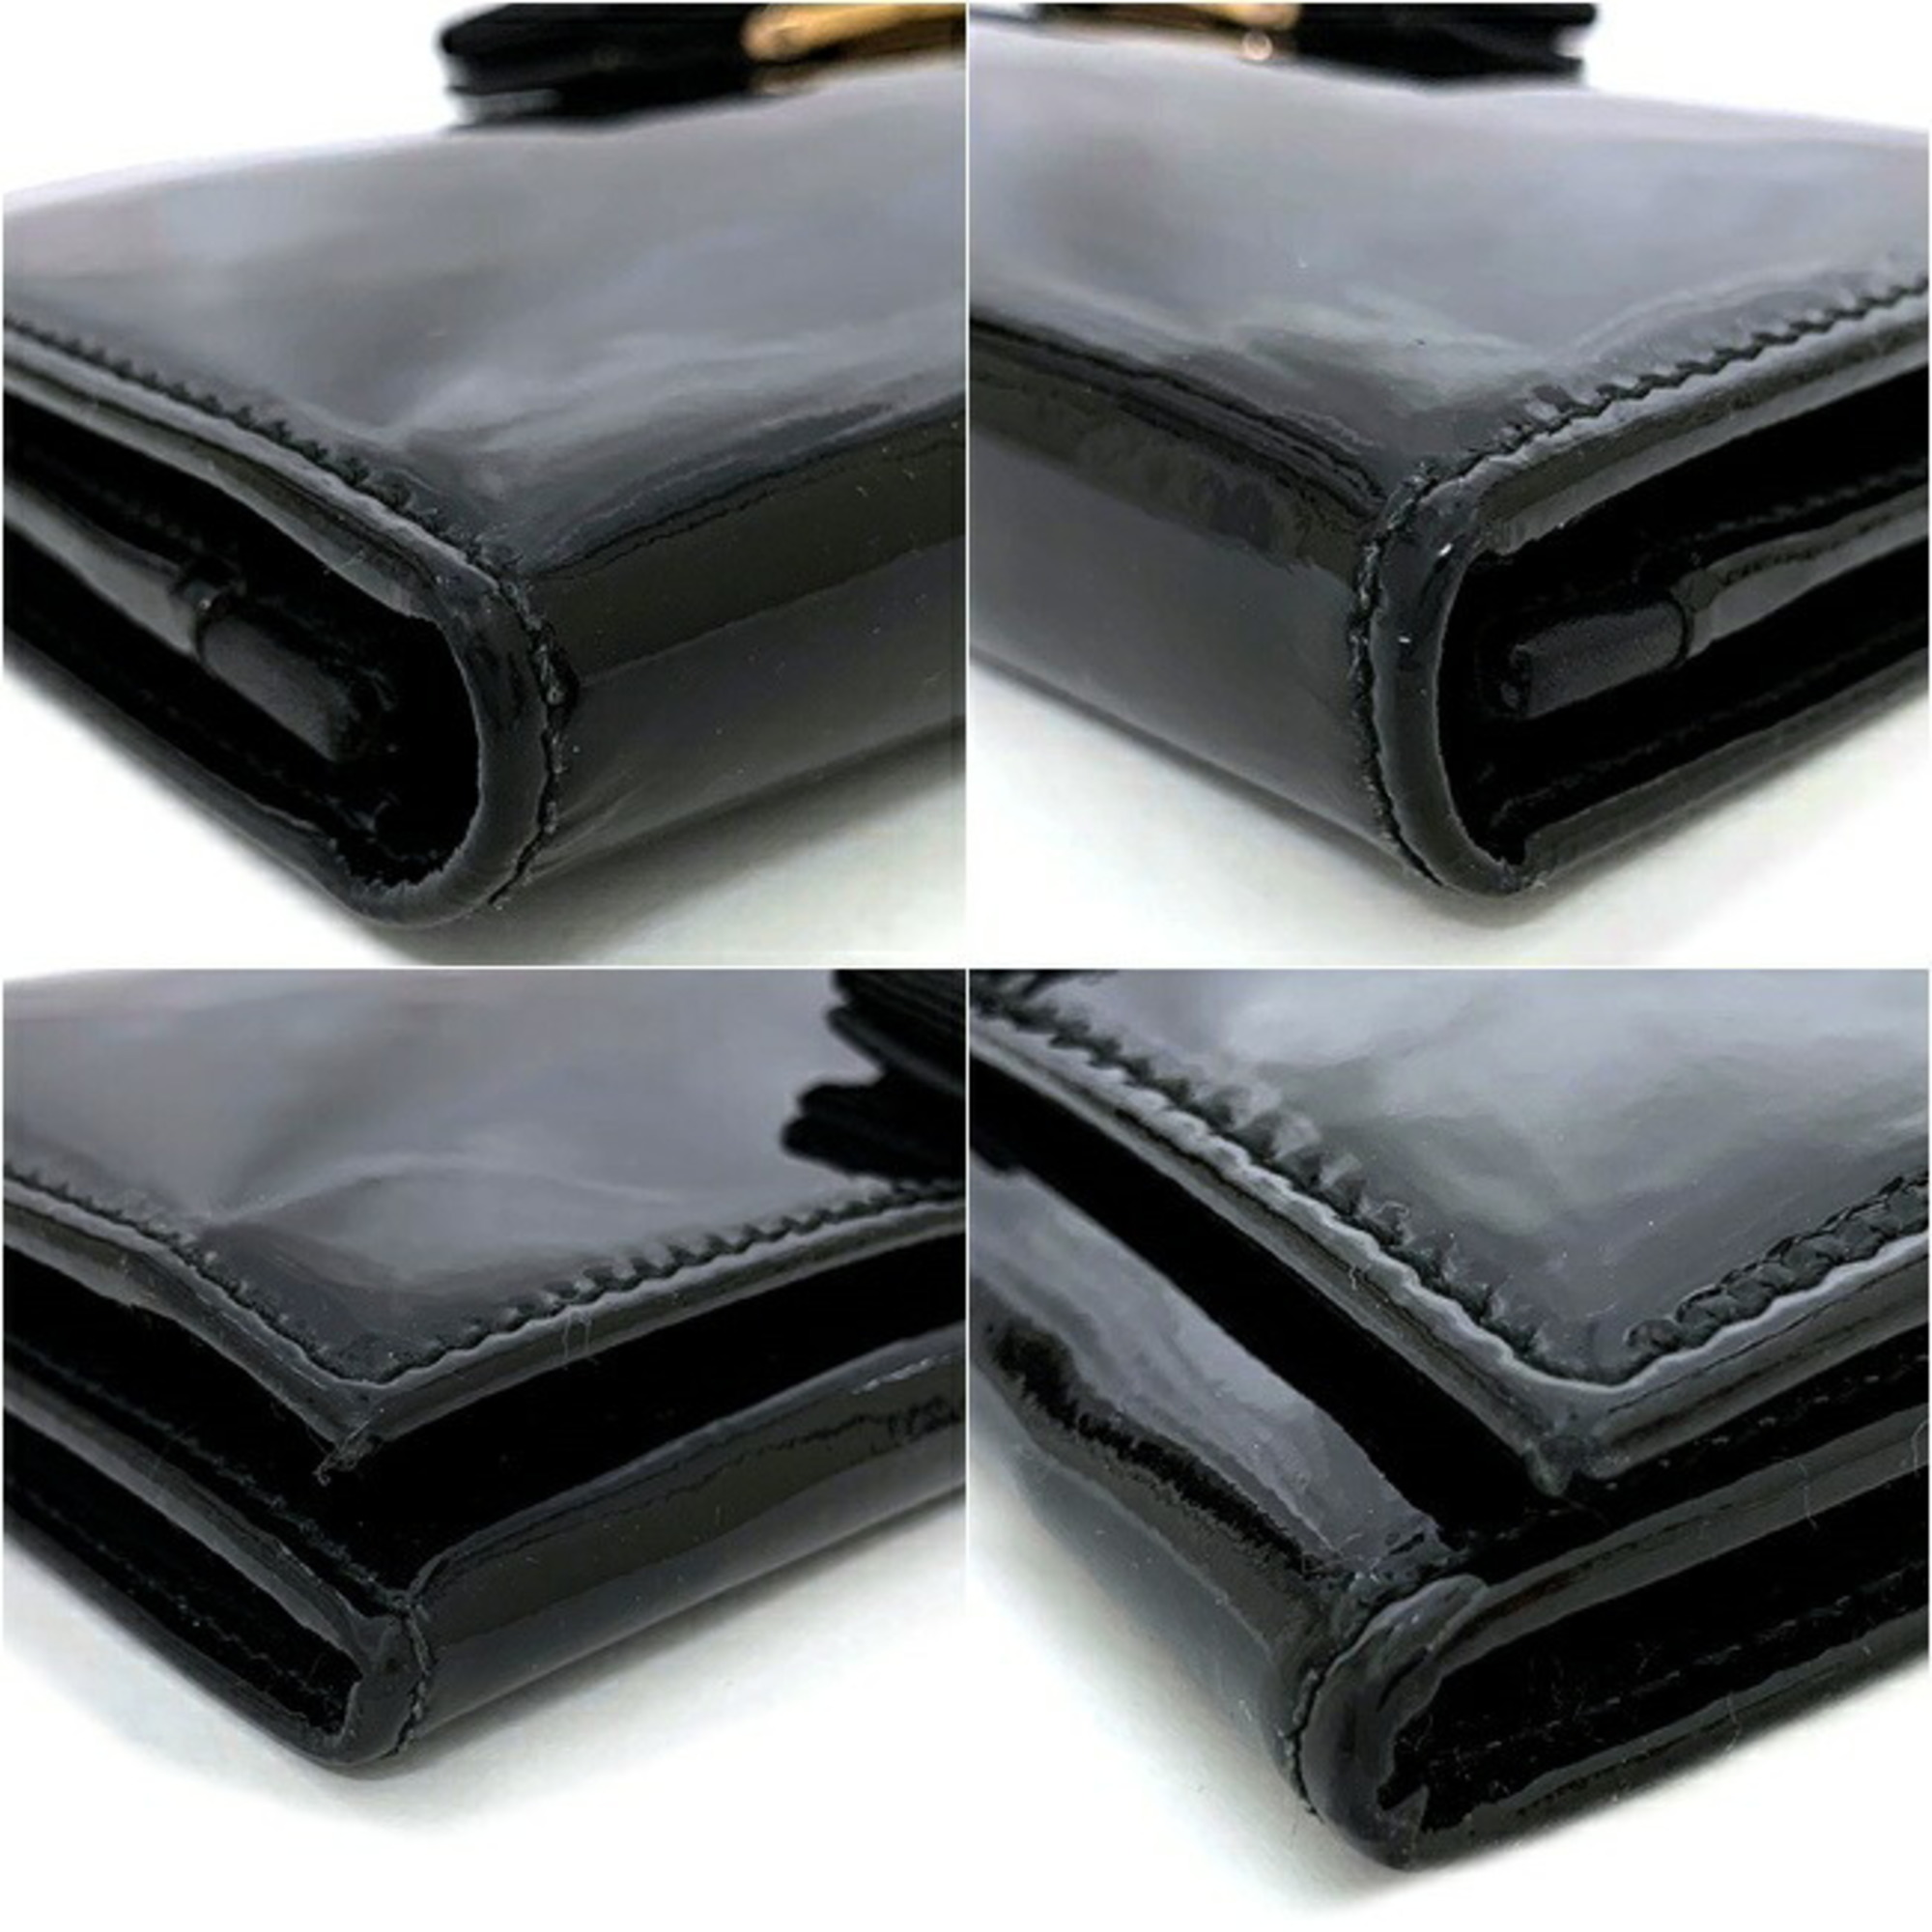 Salvatore Ferragamo Long Bi-Fold Wallet Vala Patent Enamel Leather Ribbon Metal Fittings Women's